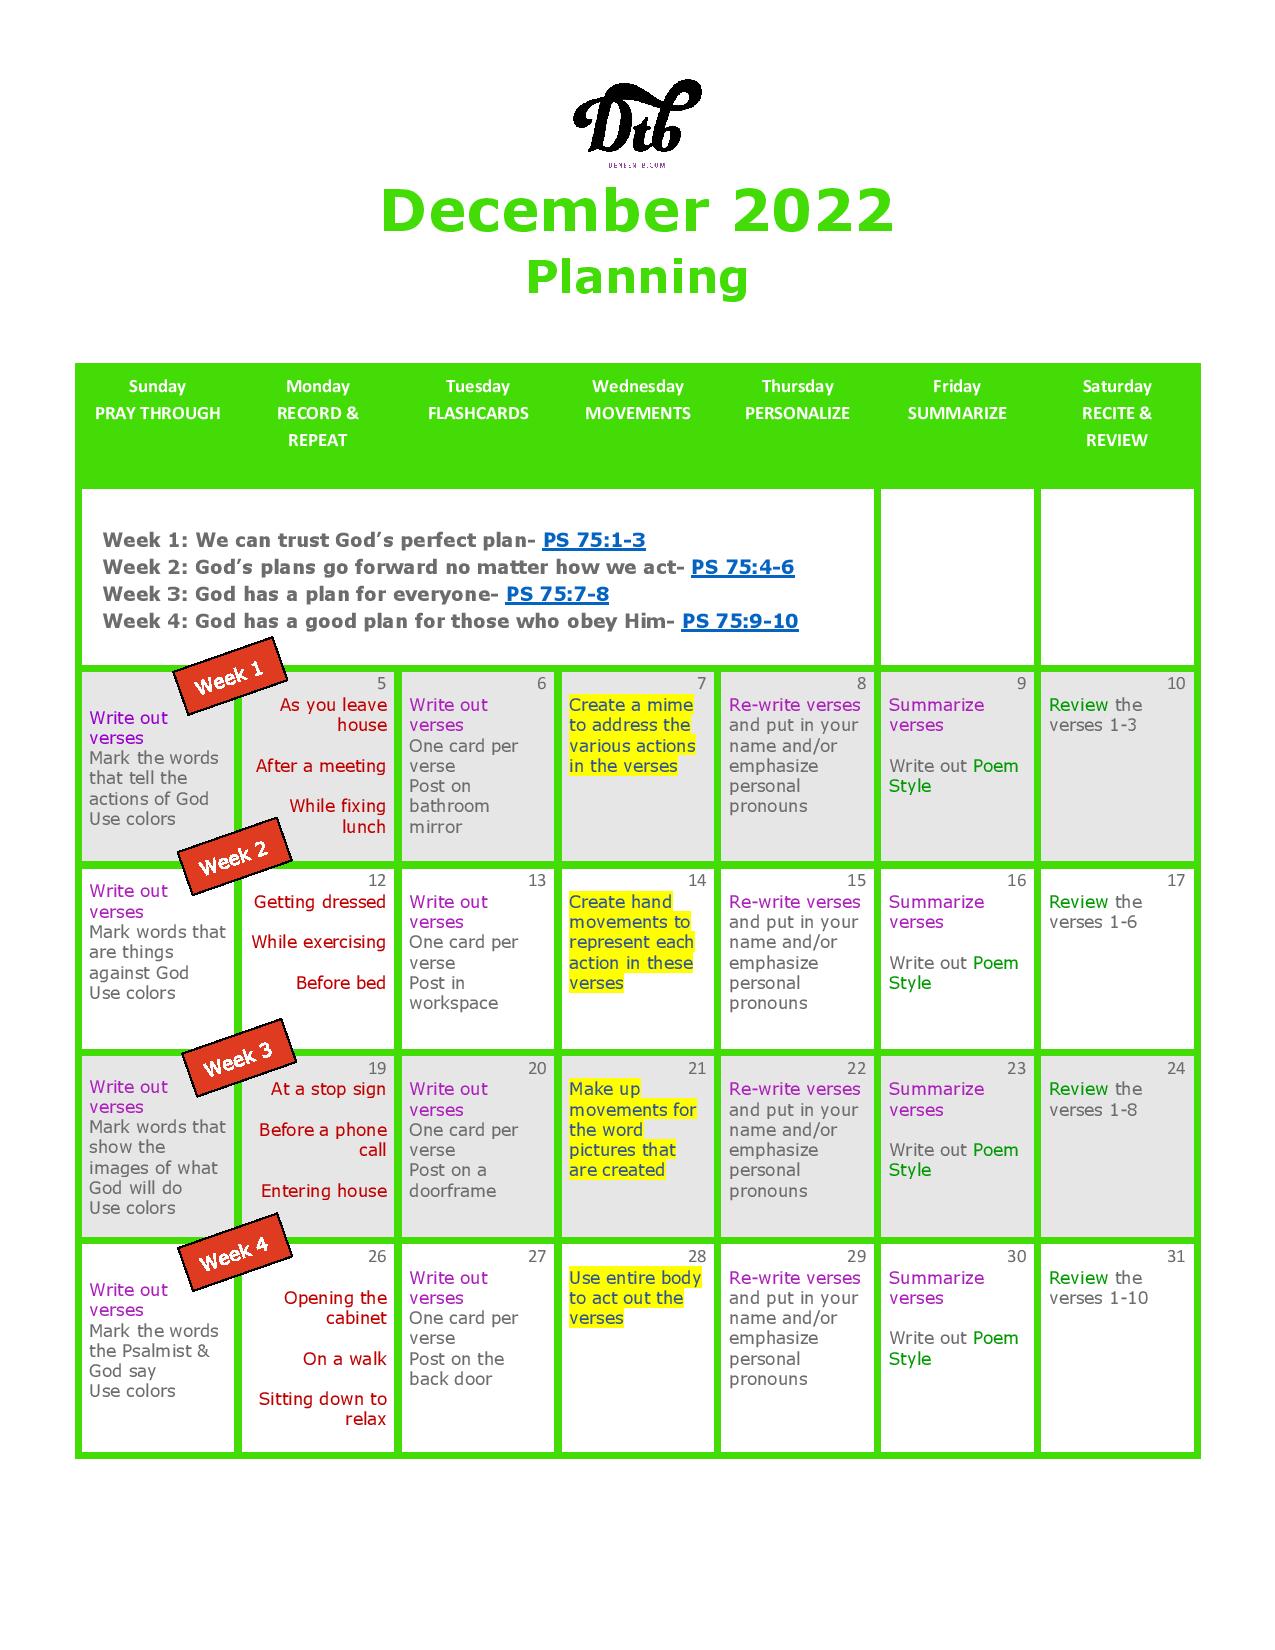 December 2022 Scripture Calendar